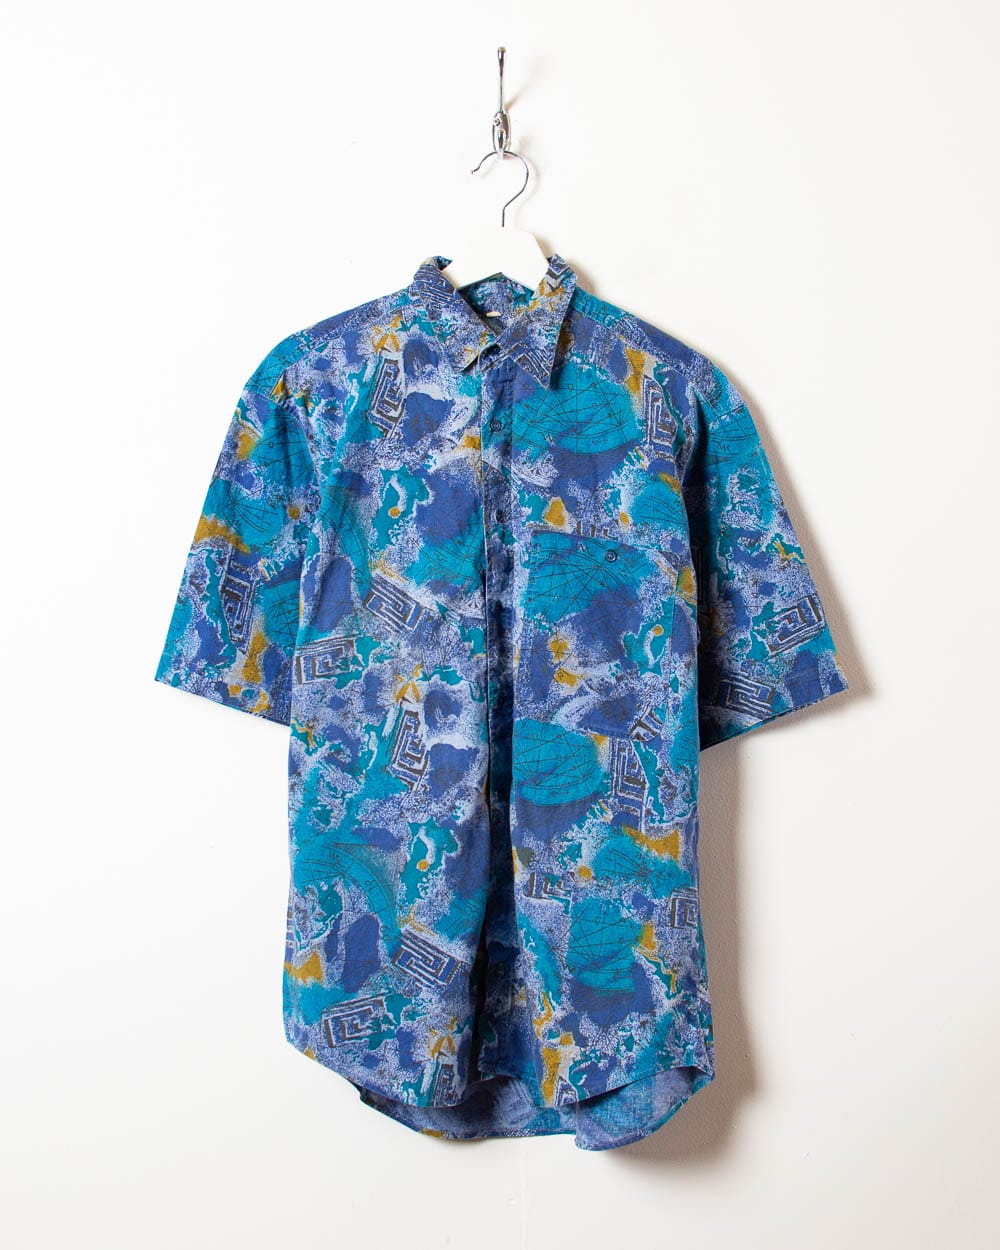 Blue All-Over Print Festival Shirt - Medium